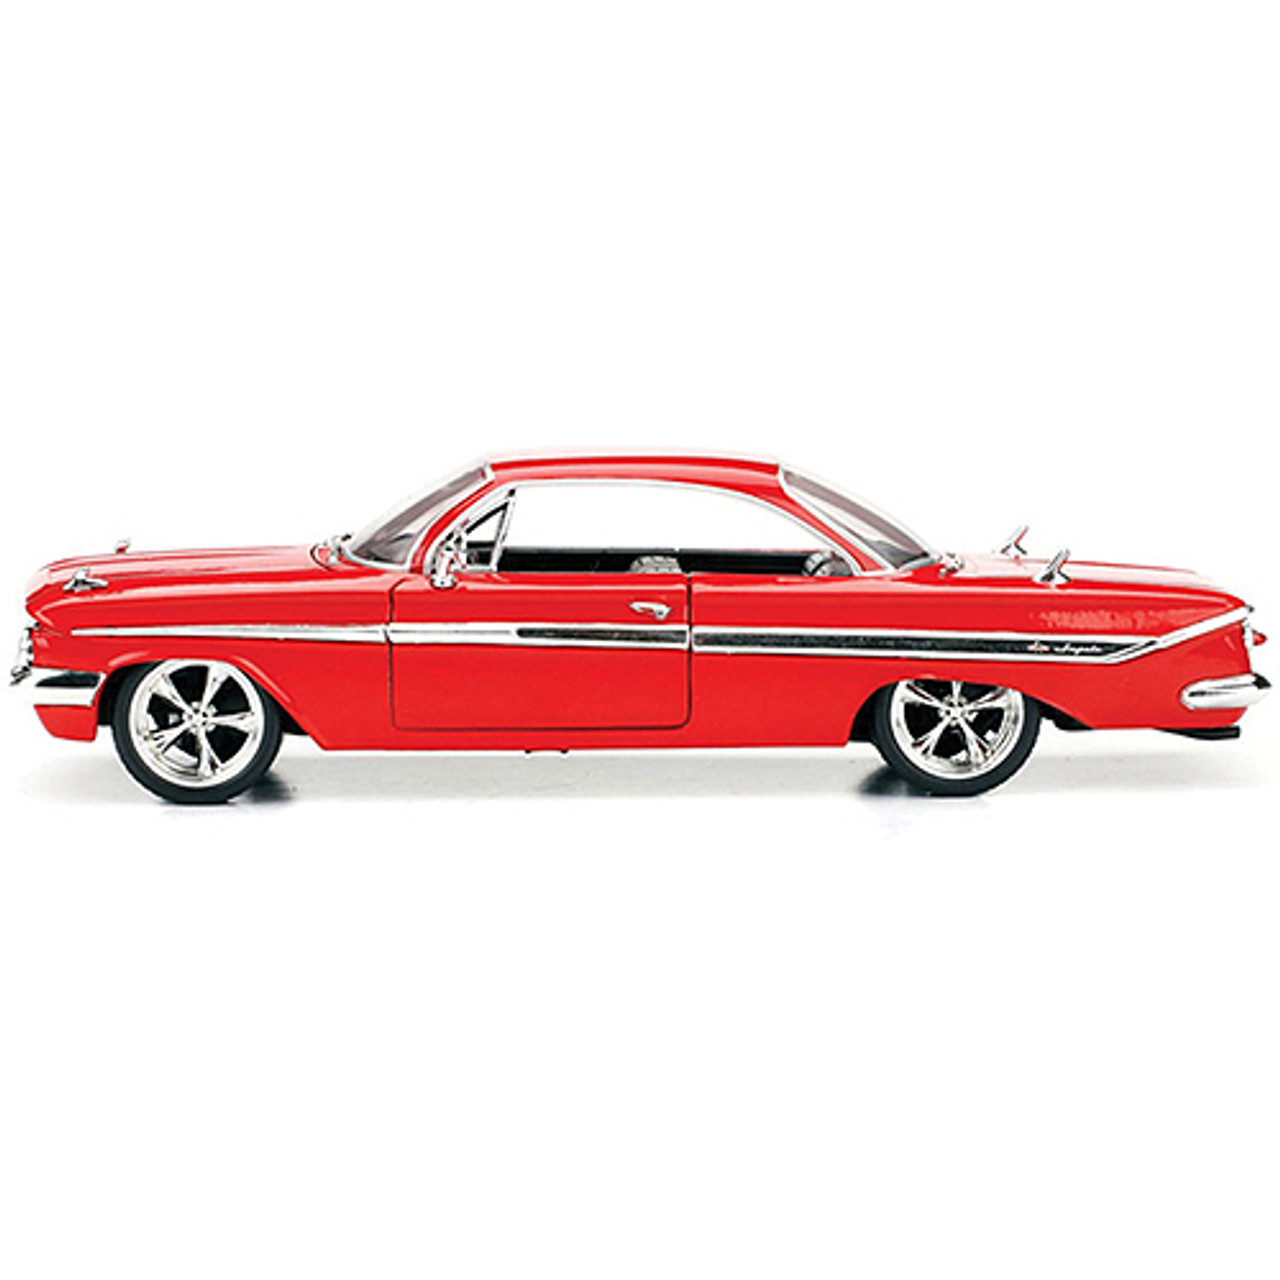 Fast & Furious Chevy Impala Diecast Model | Jada Toys